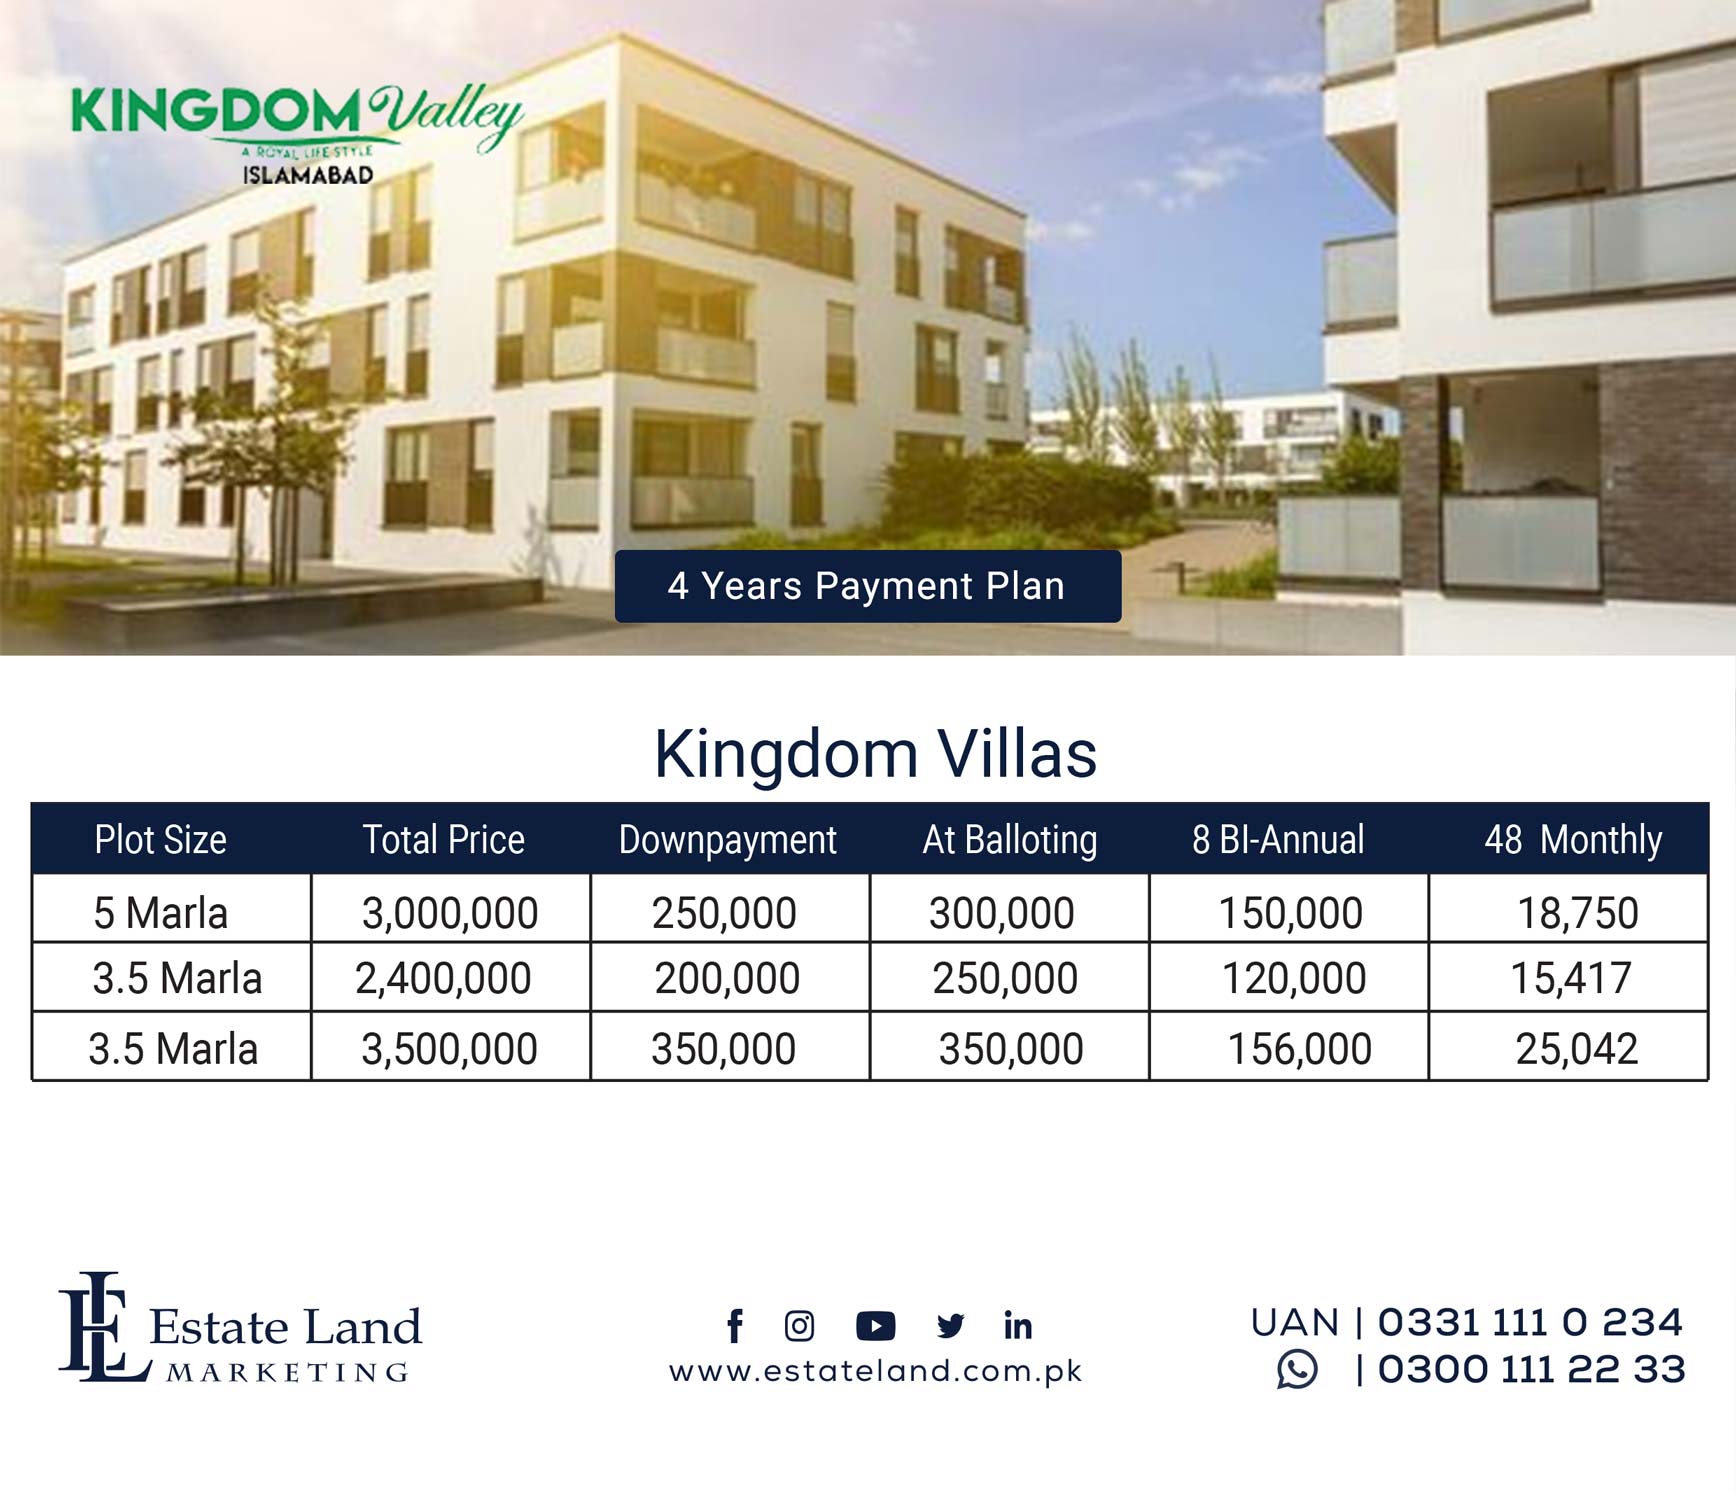 Kingdom Villas Payment Plan Kingdom Valley Islamabad